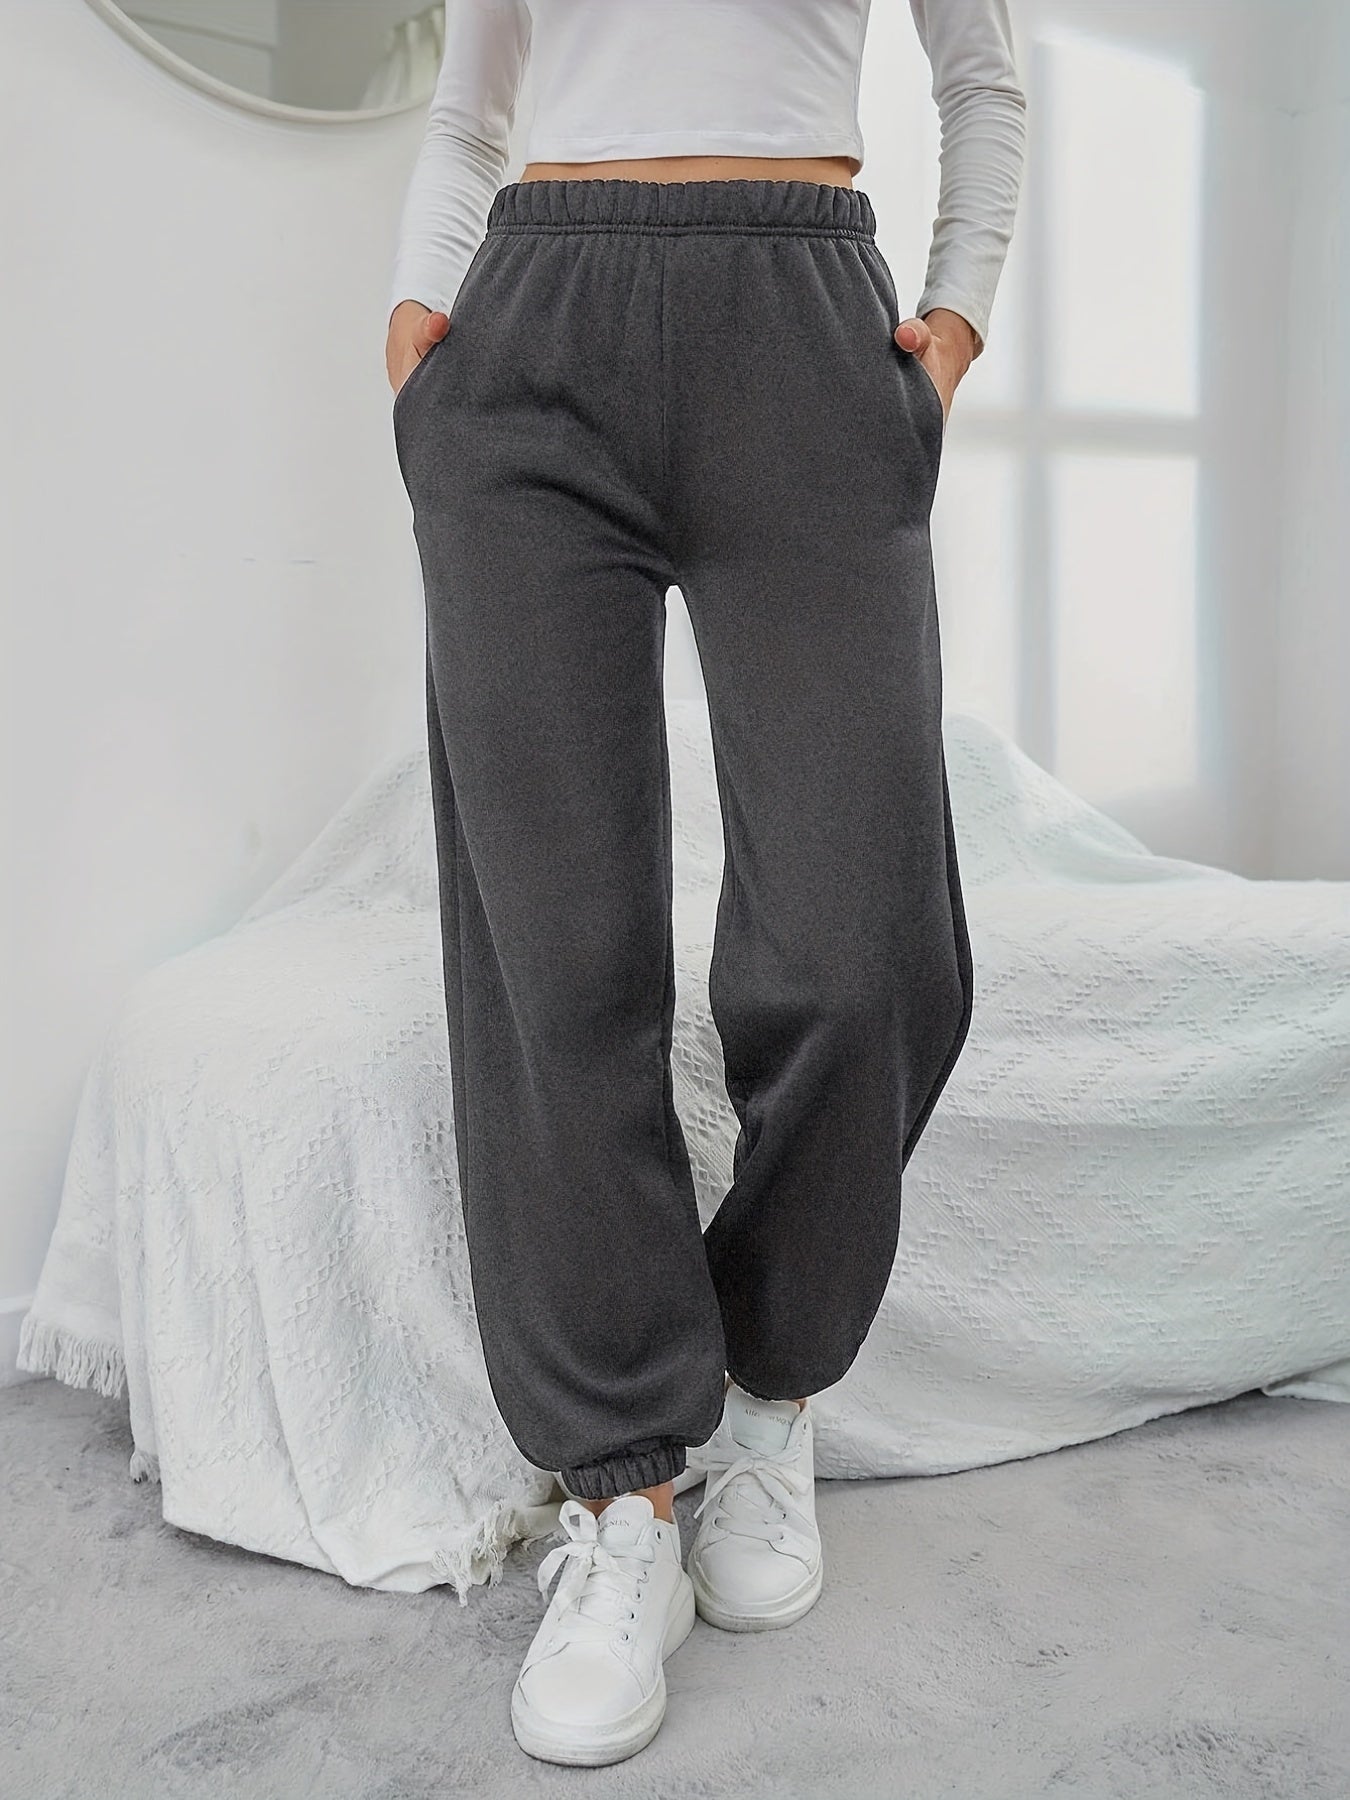 vlovelaw  Solid Versatile Pants, Casual Elastic Waist Jogger Pants, Women's Clothing